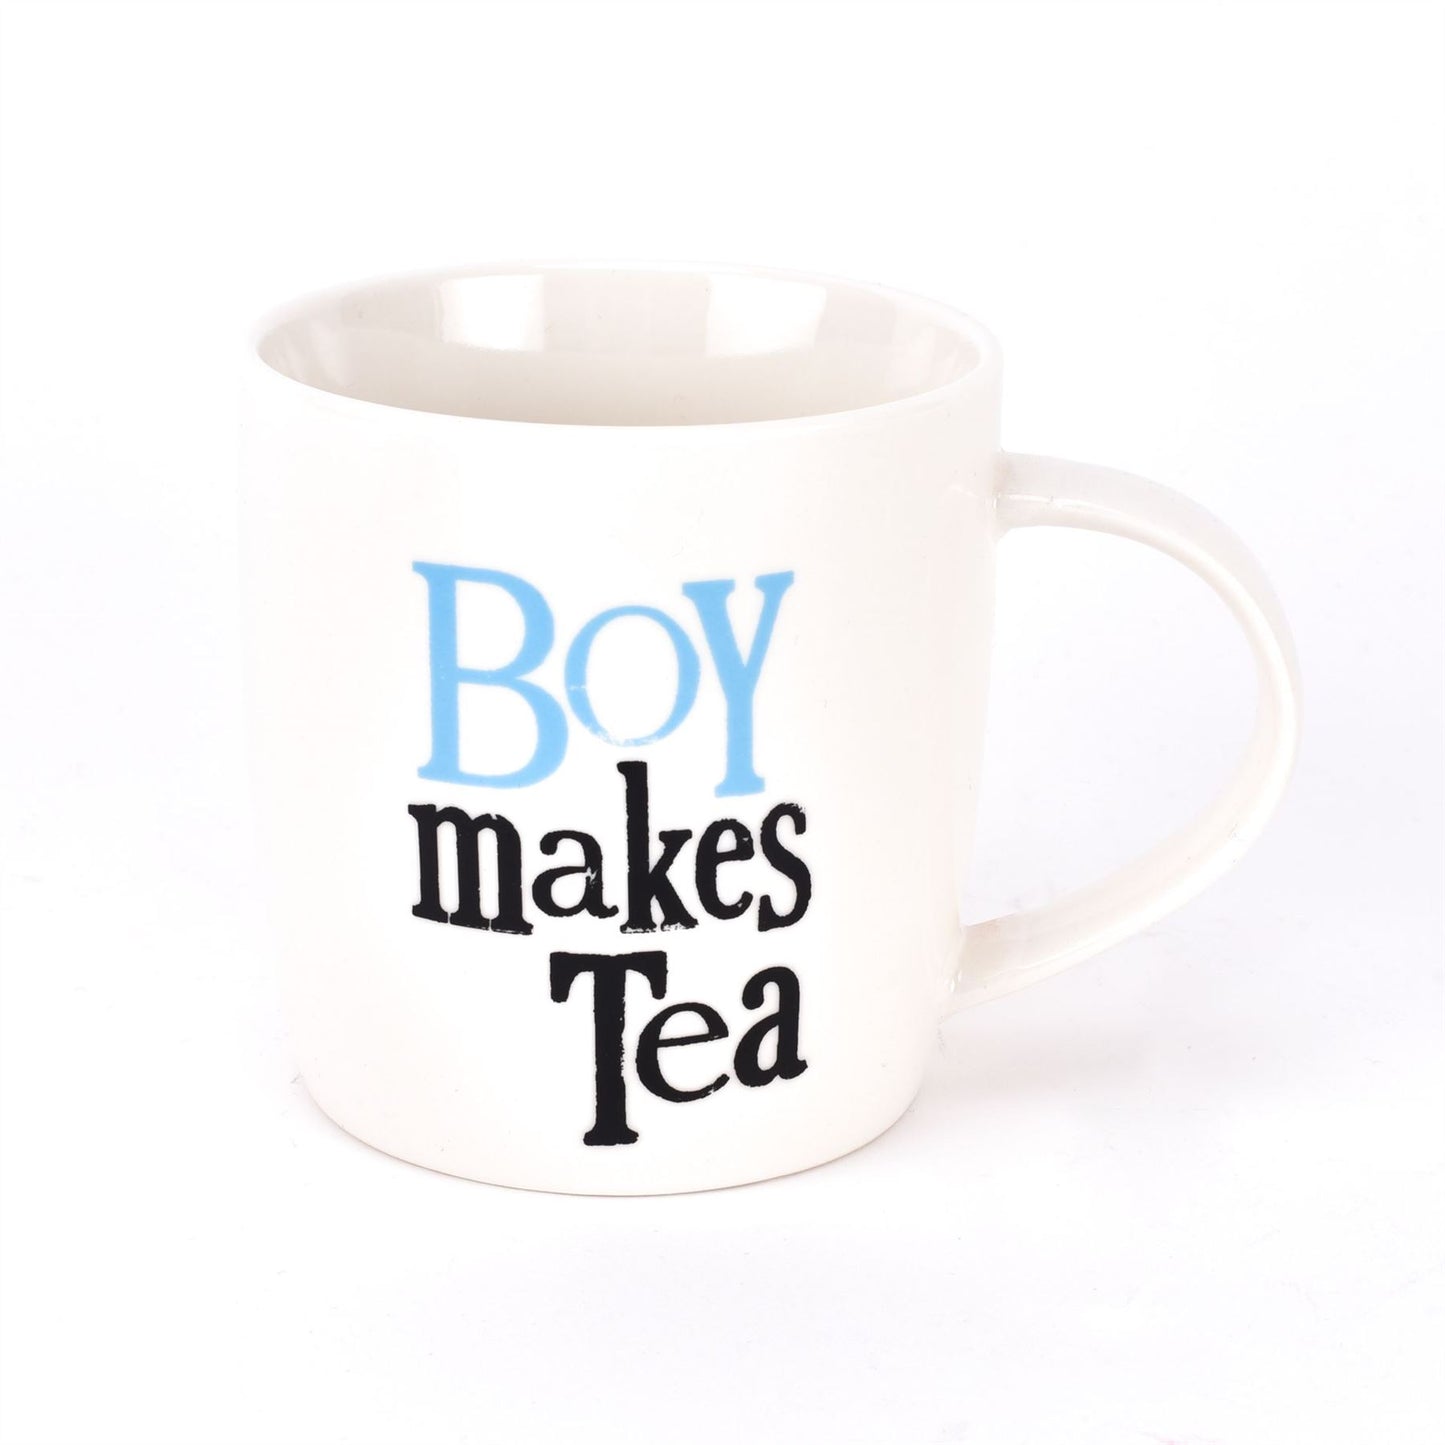 Brightside Girls Meets Boy, Boy Makes Tea Set of 2 Mugs